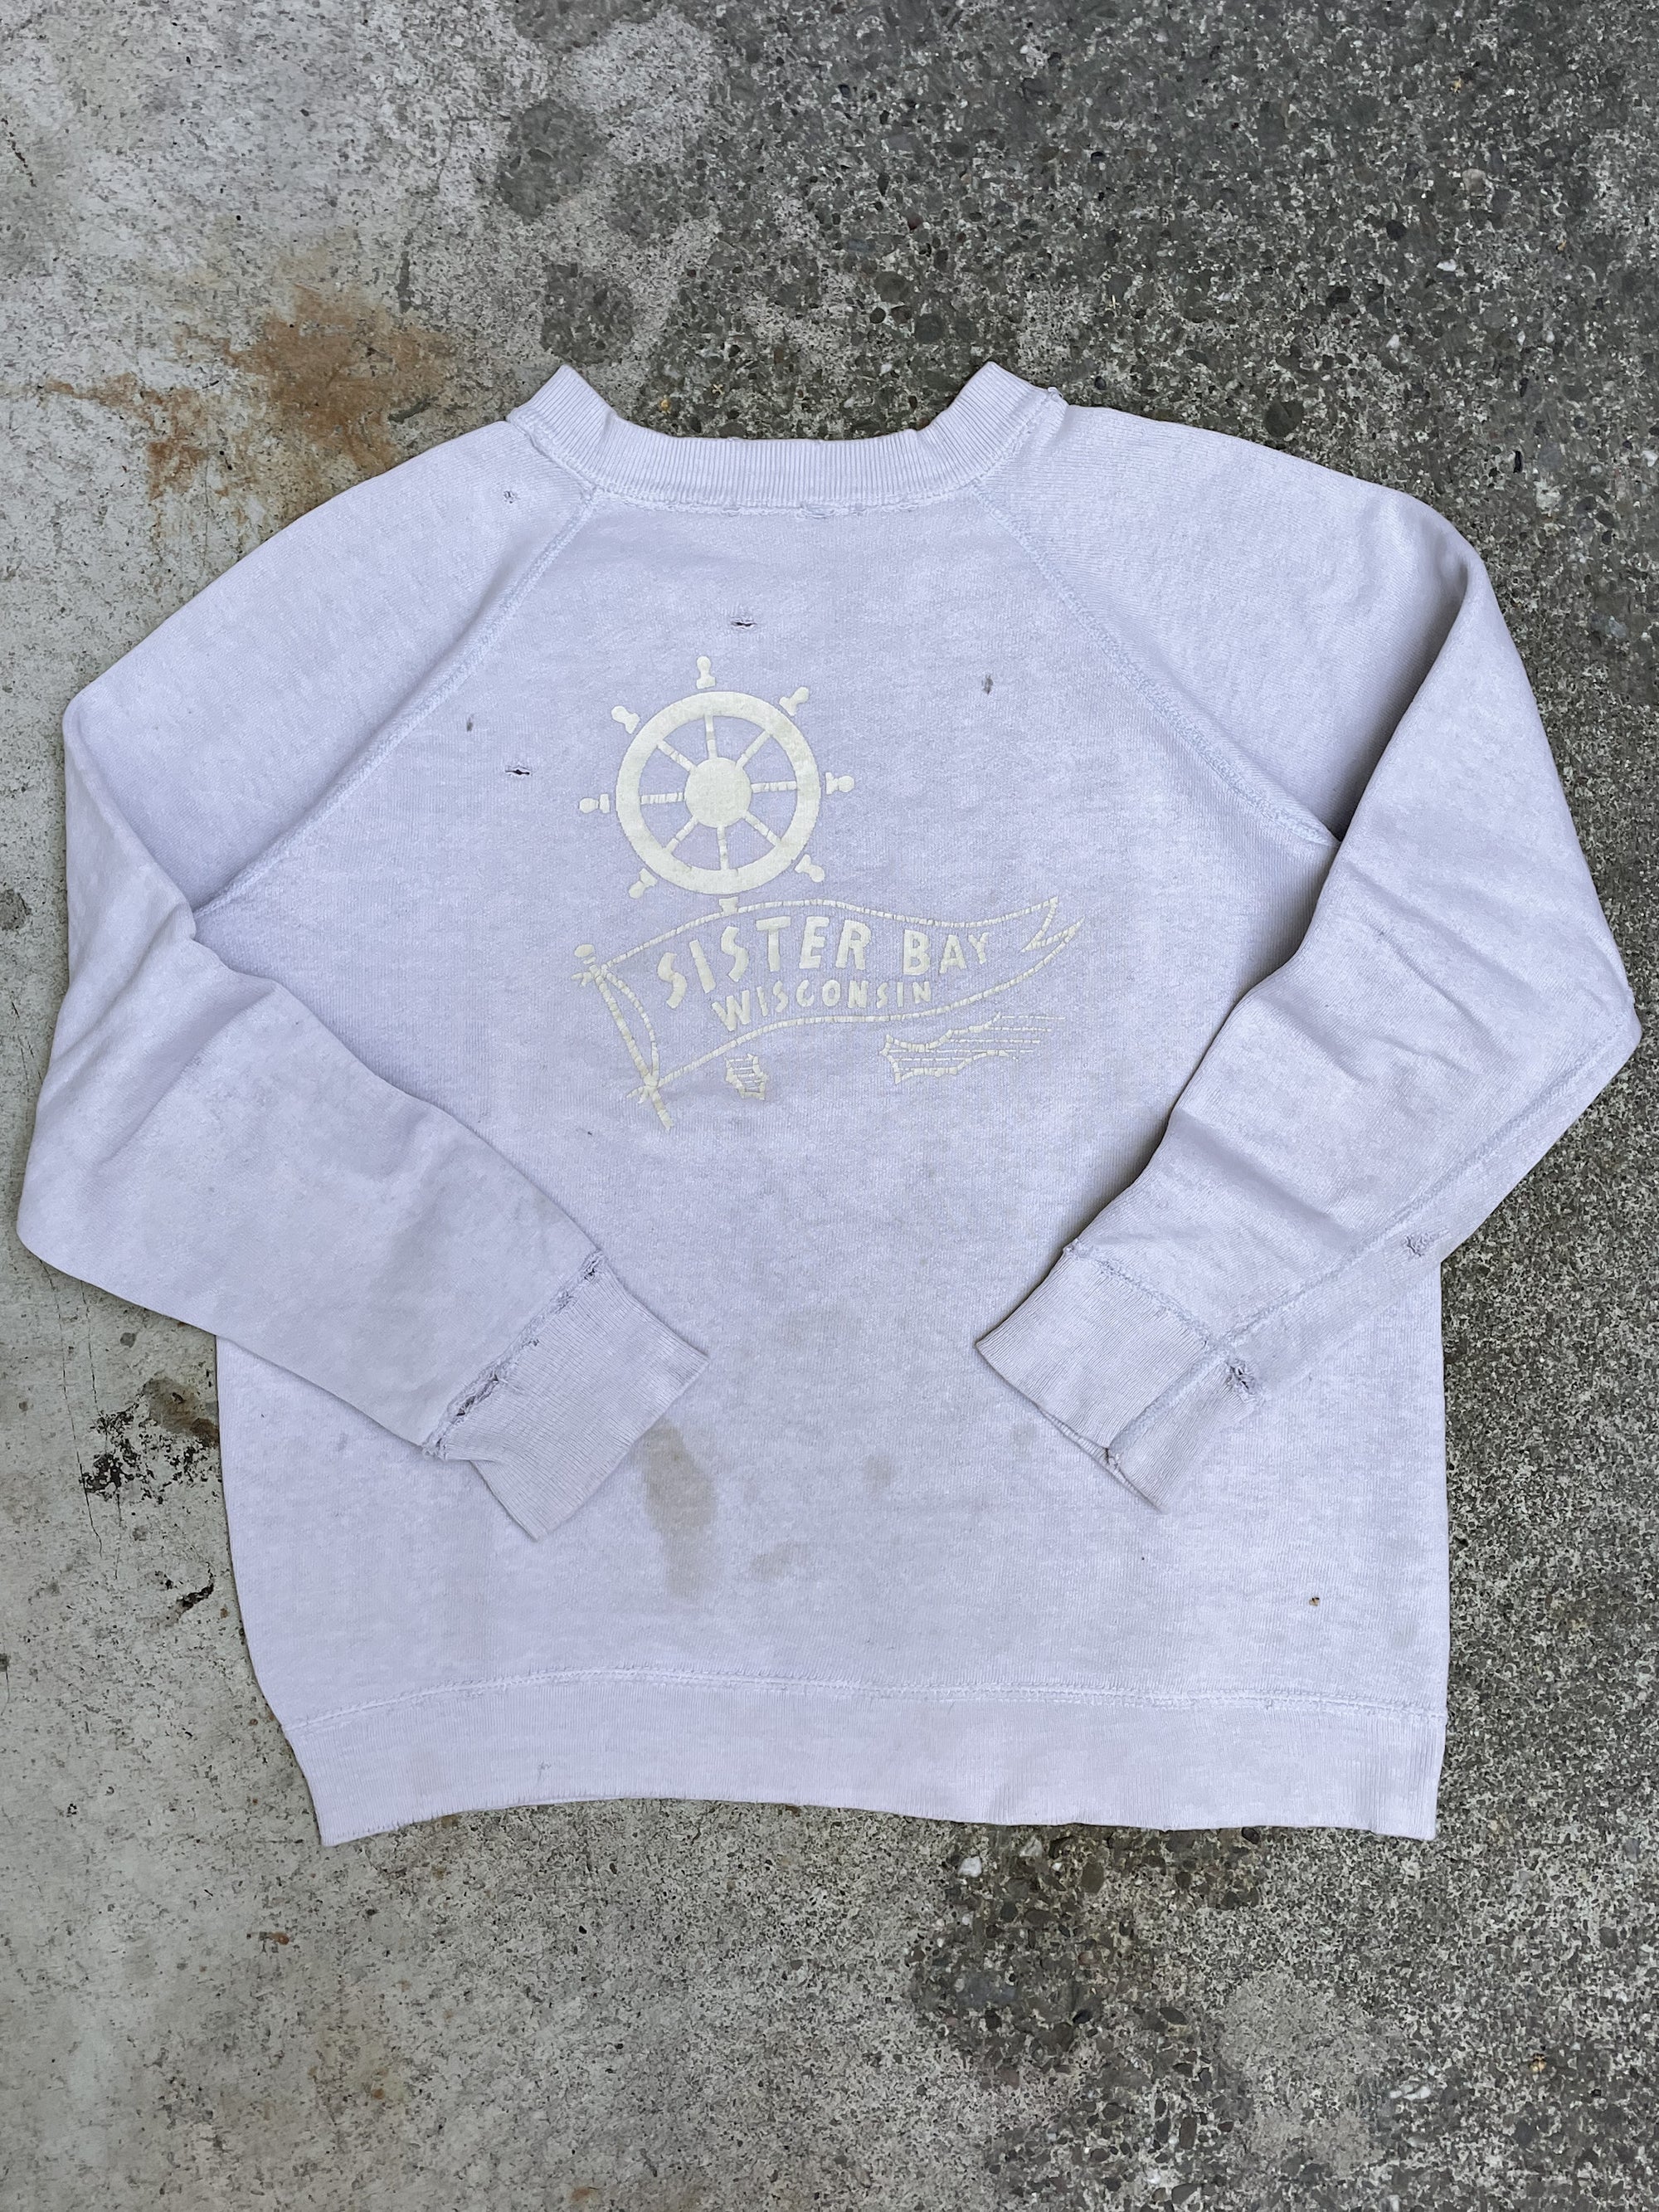 1950s/60s “Sister Bay” Pale Lavender Raglan Sweatshirt (S)